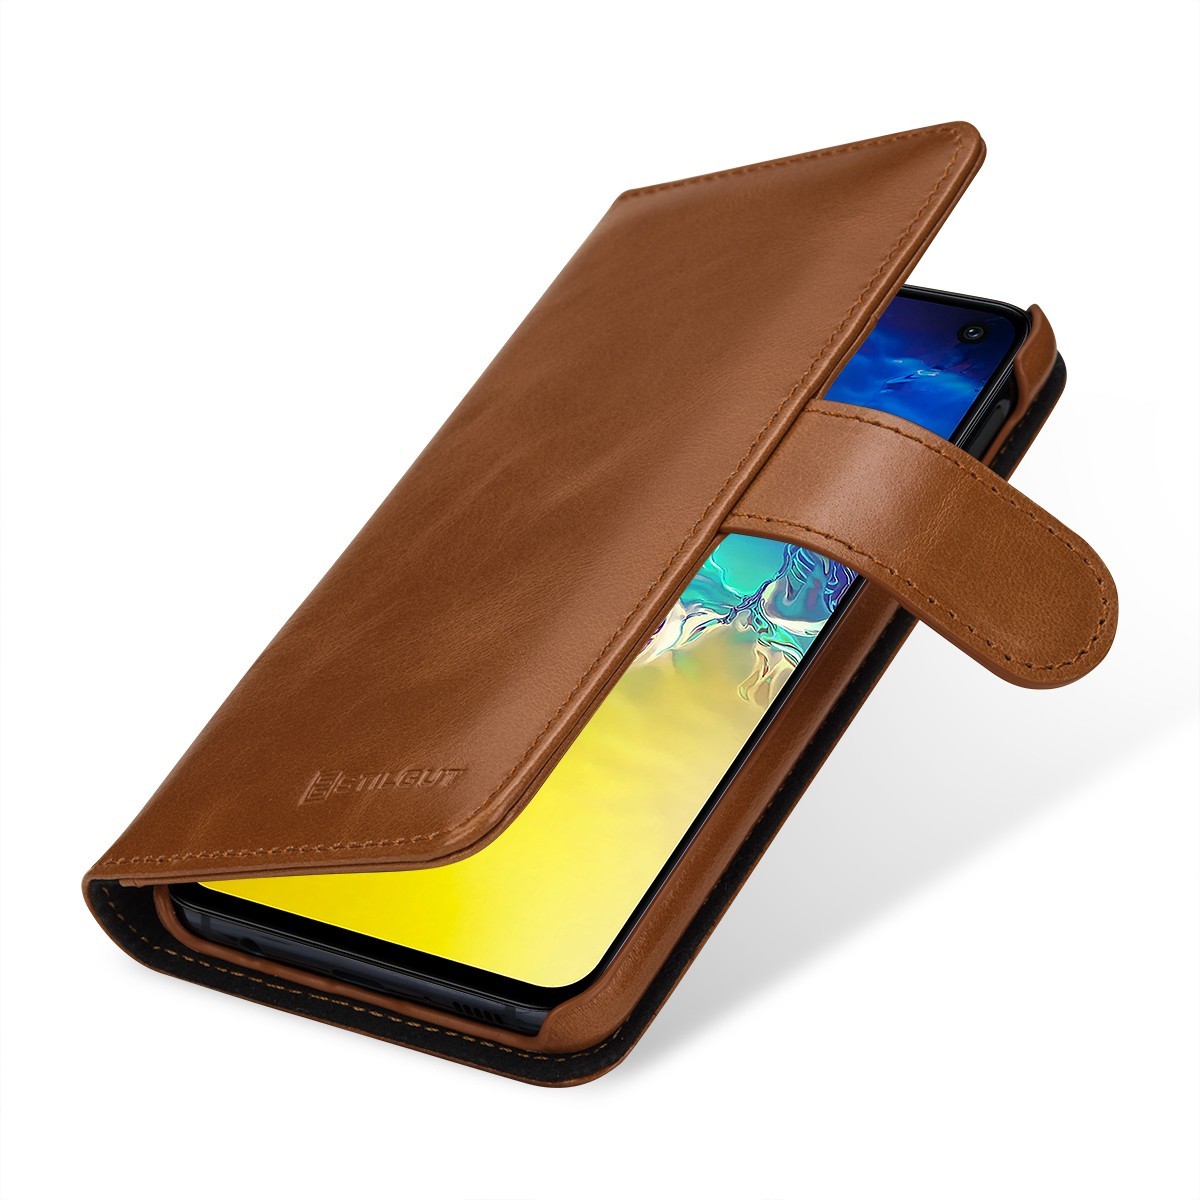 Etui Galaxy S10e porte-cartes cognac en cuir véritable - Stilgut